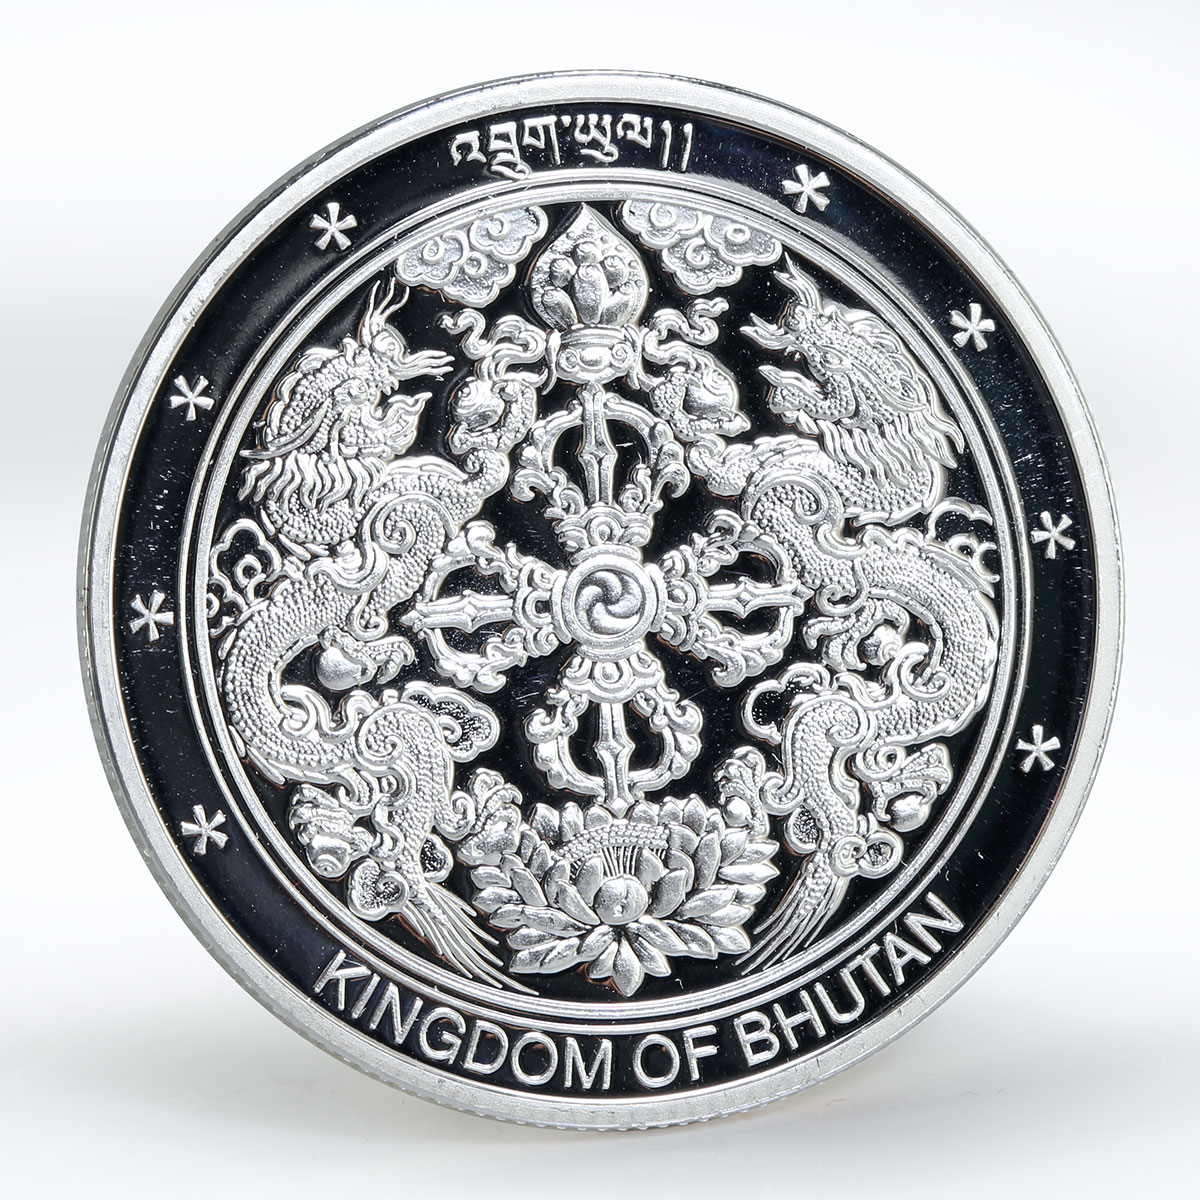 Bhutan 250 ngultrum Games Bridge card proof silver coin 2004